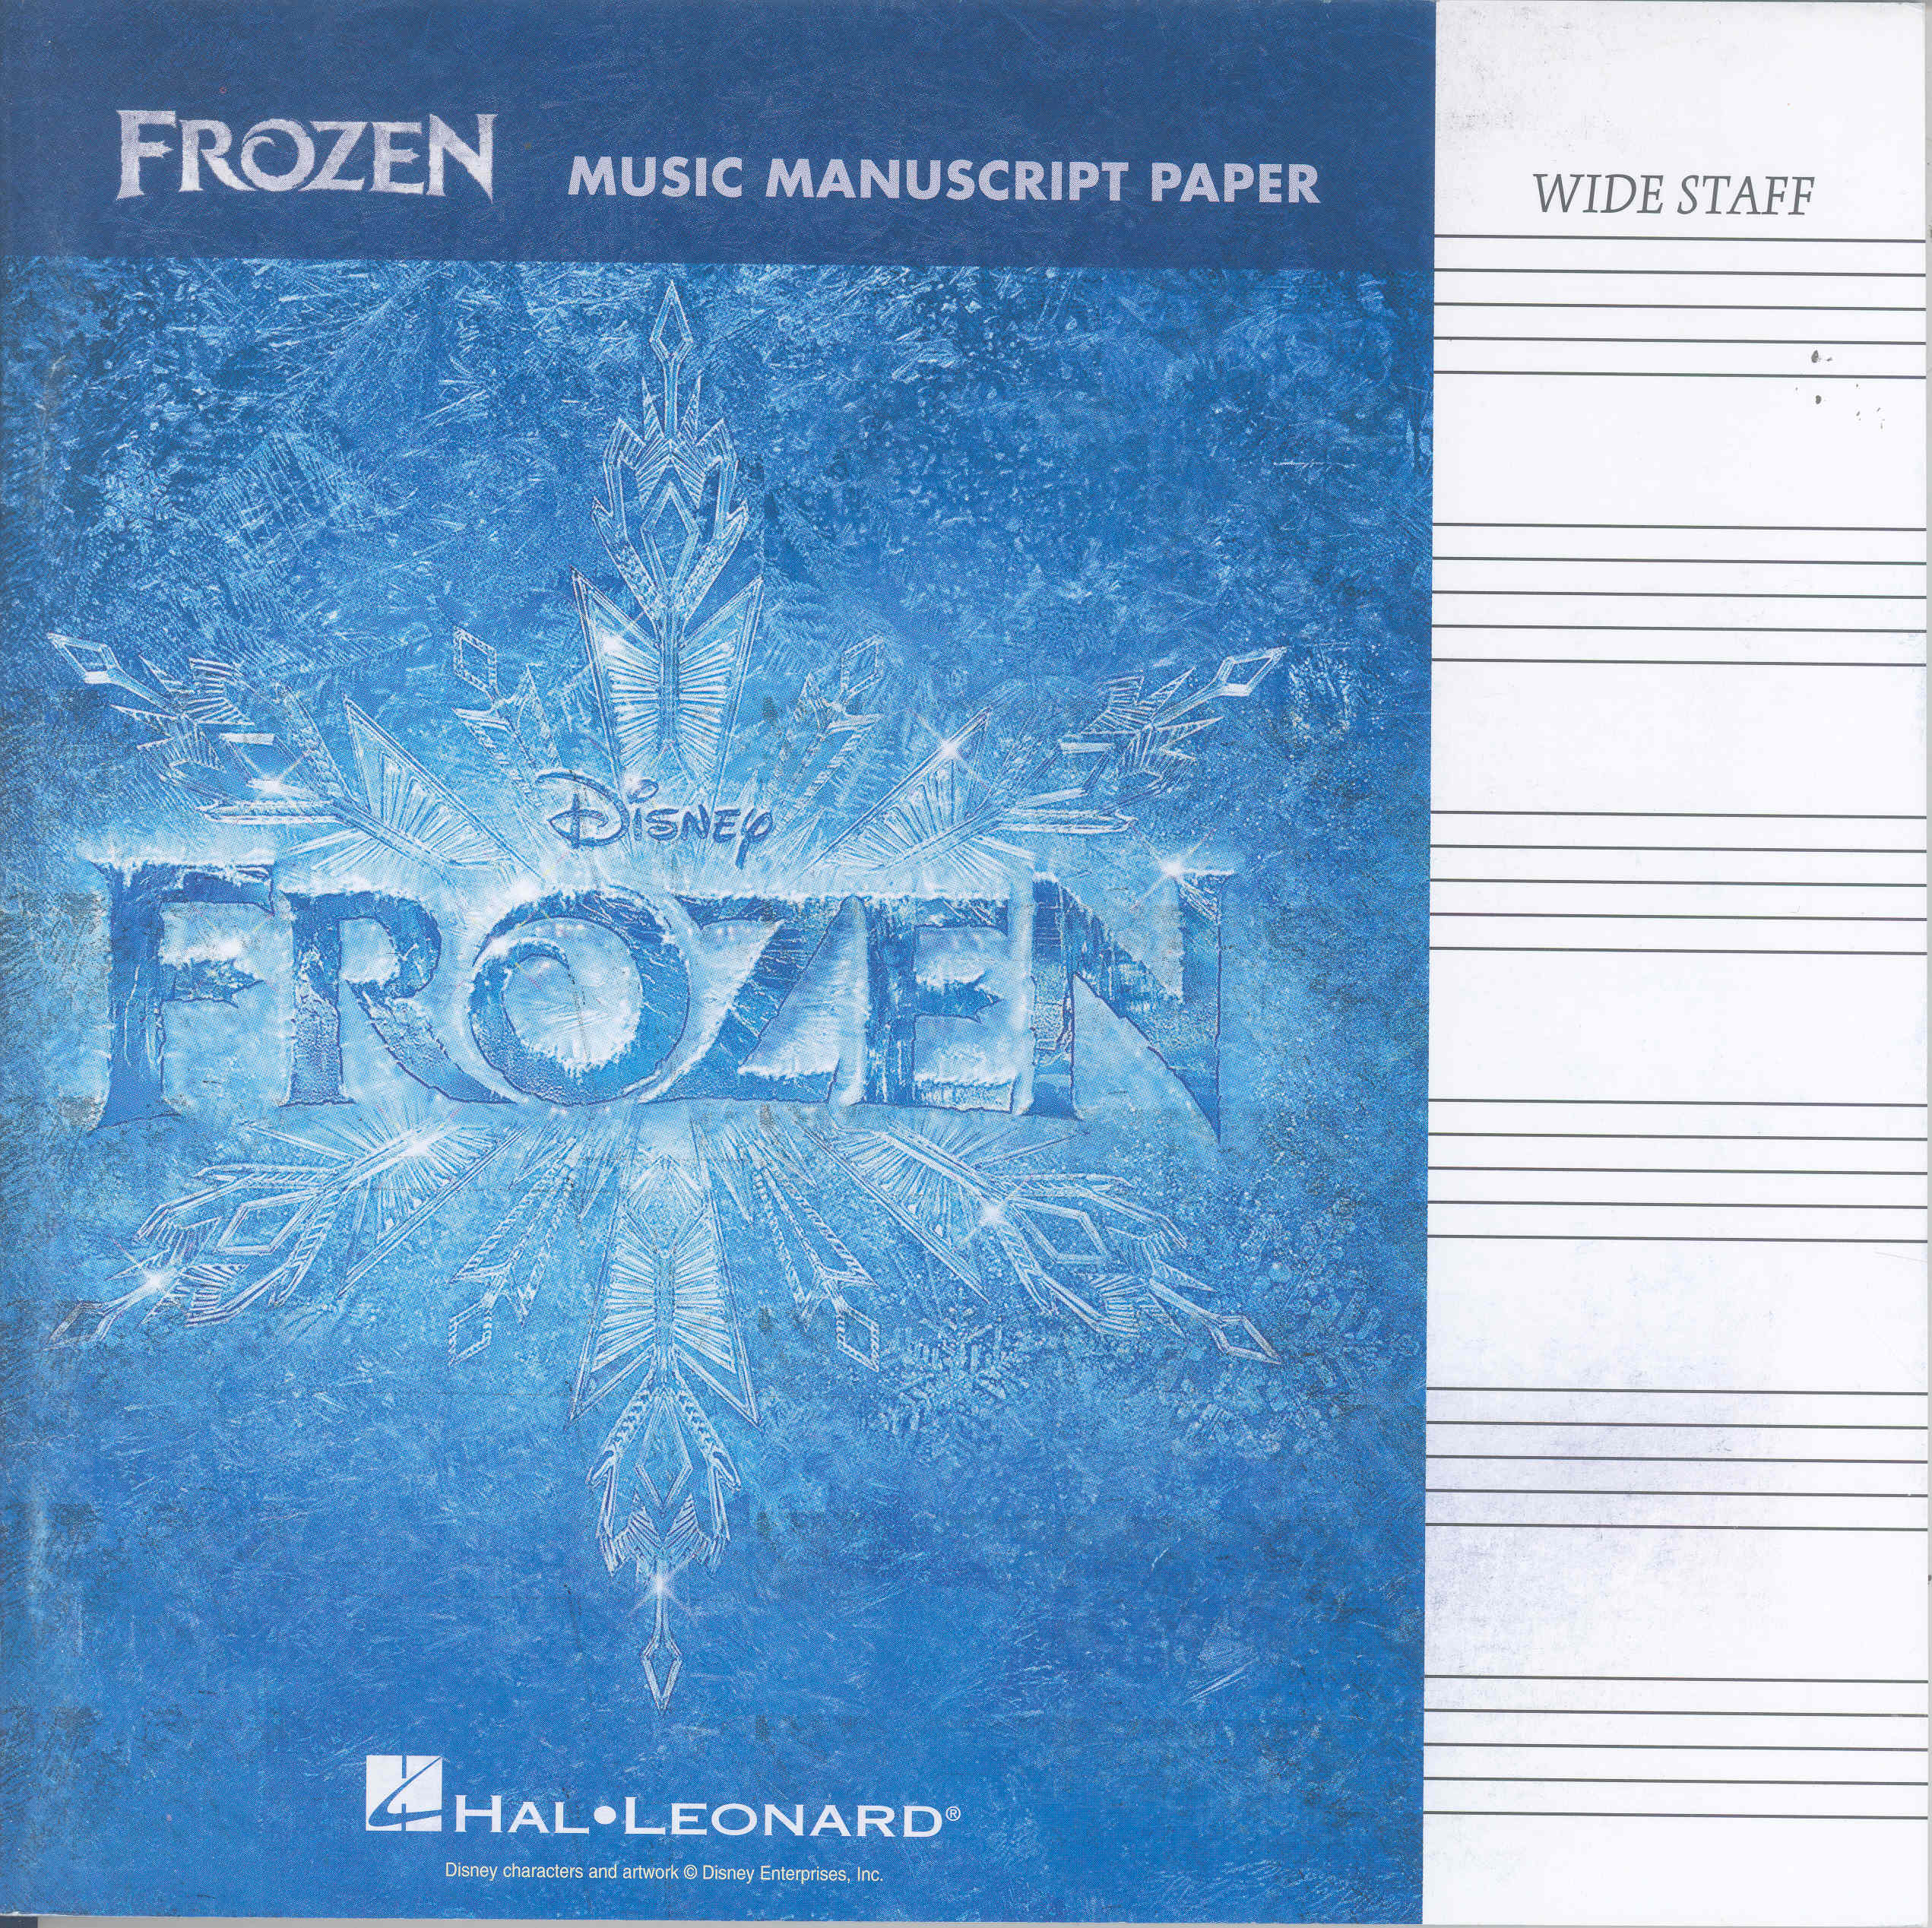 Frozen Music Manuscript Paper (wide-staff) Sheet Music Songbook